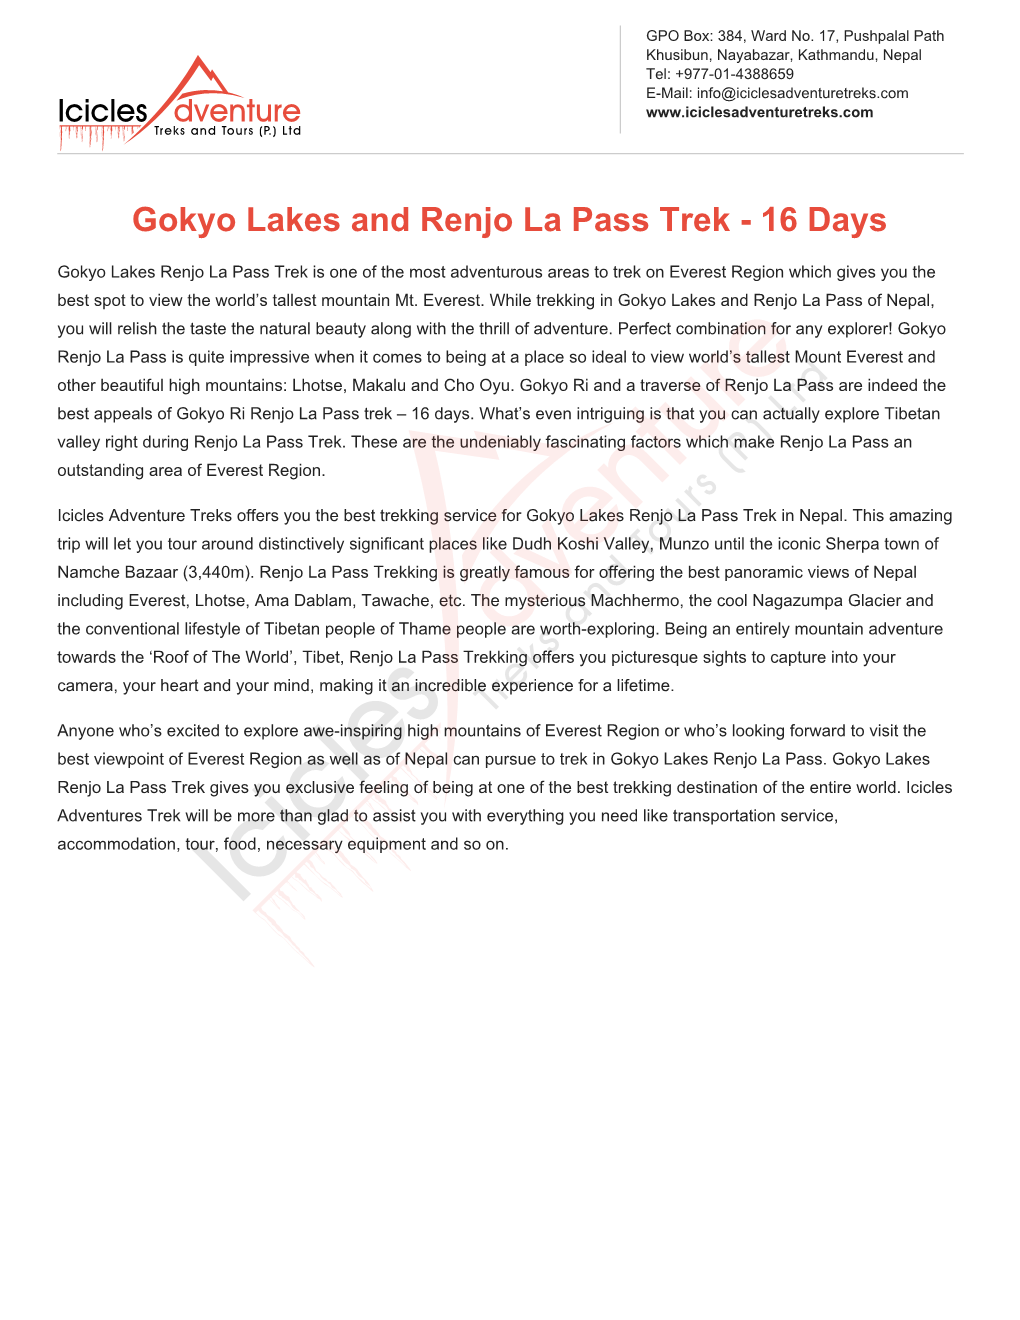 Gokyo Lakes and Renjo La Pass Trek - 16 Days